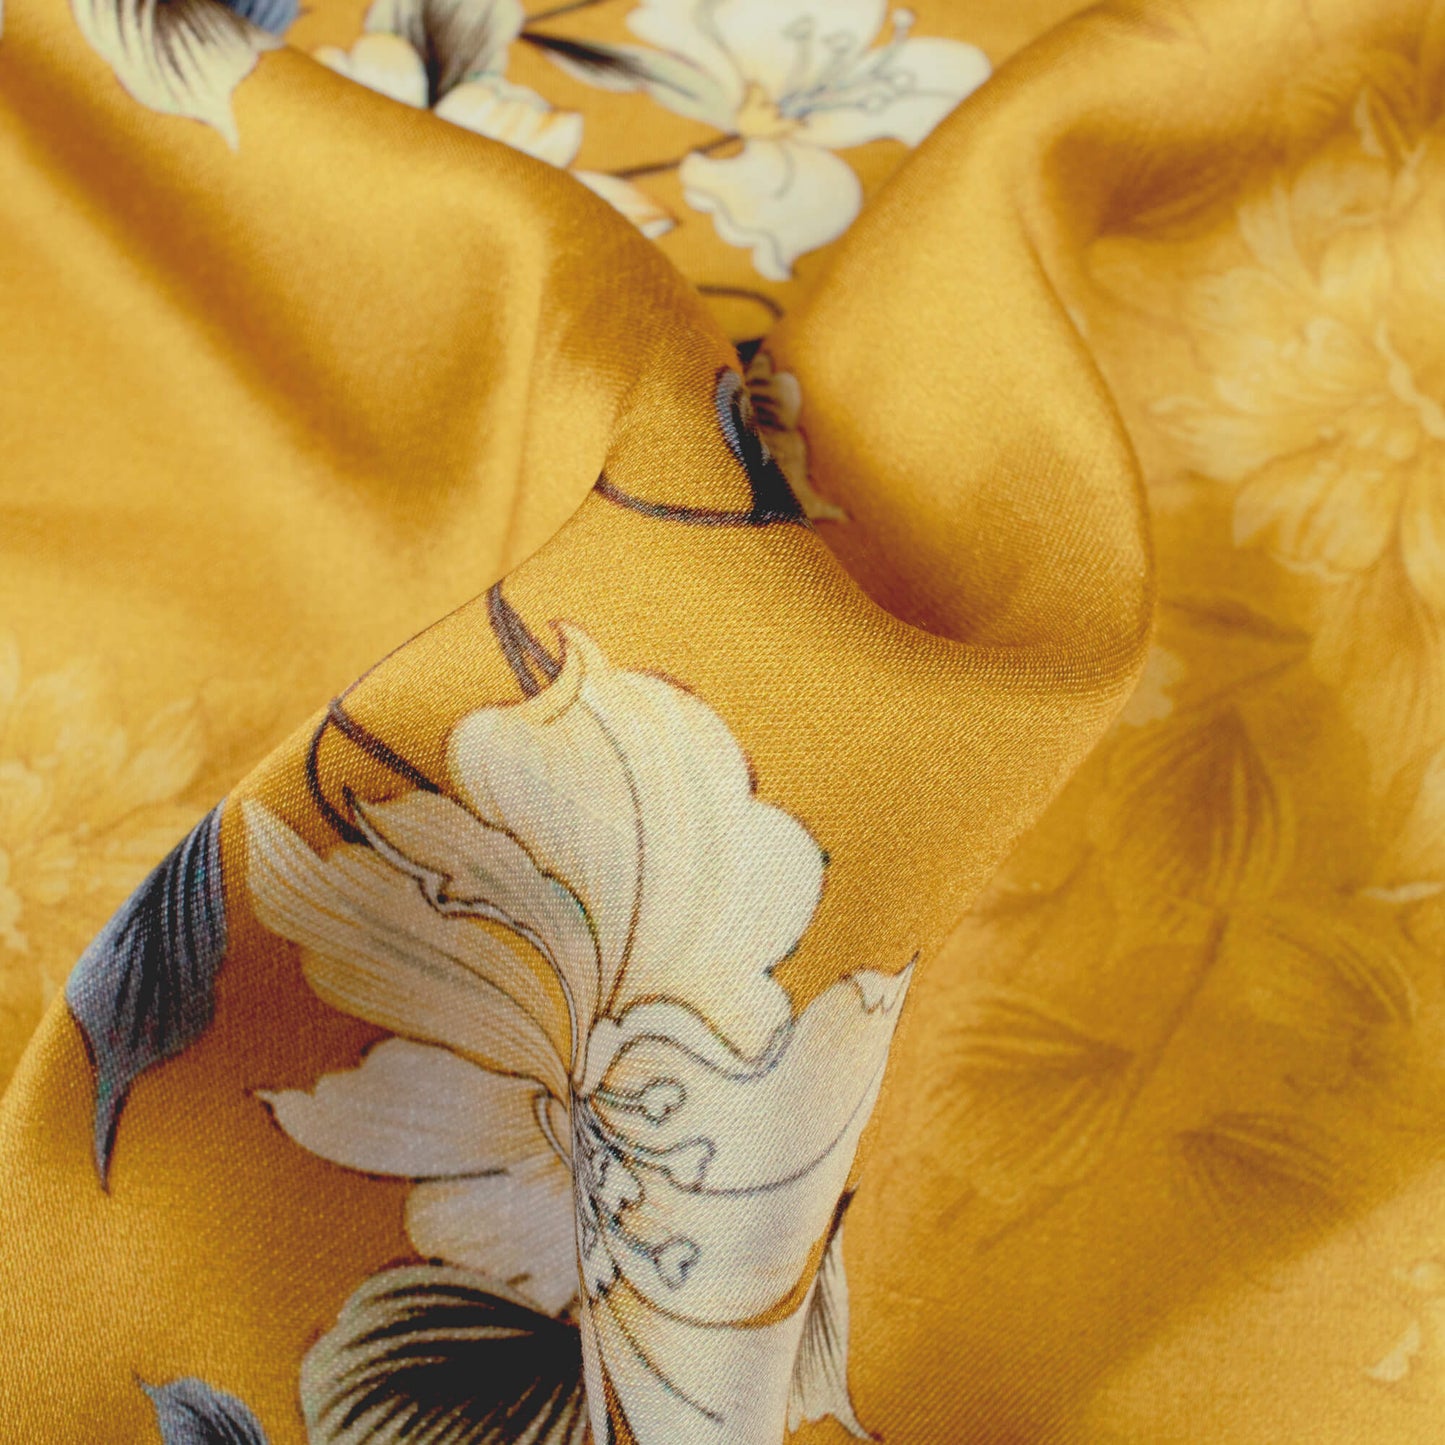 Dijon Yellow And White Floral Pattern Digital Print Premium Lush Satin Fabric